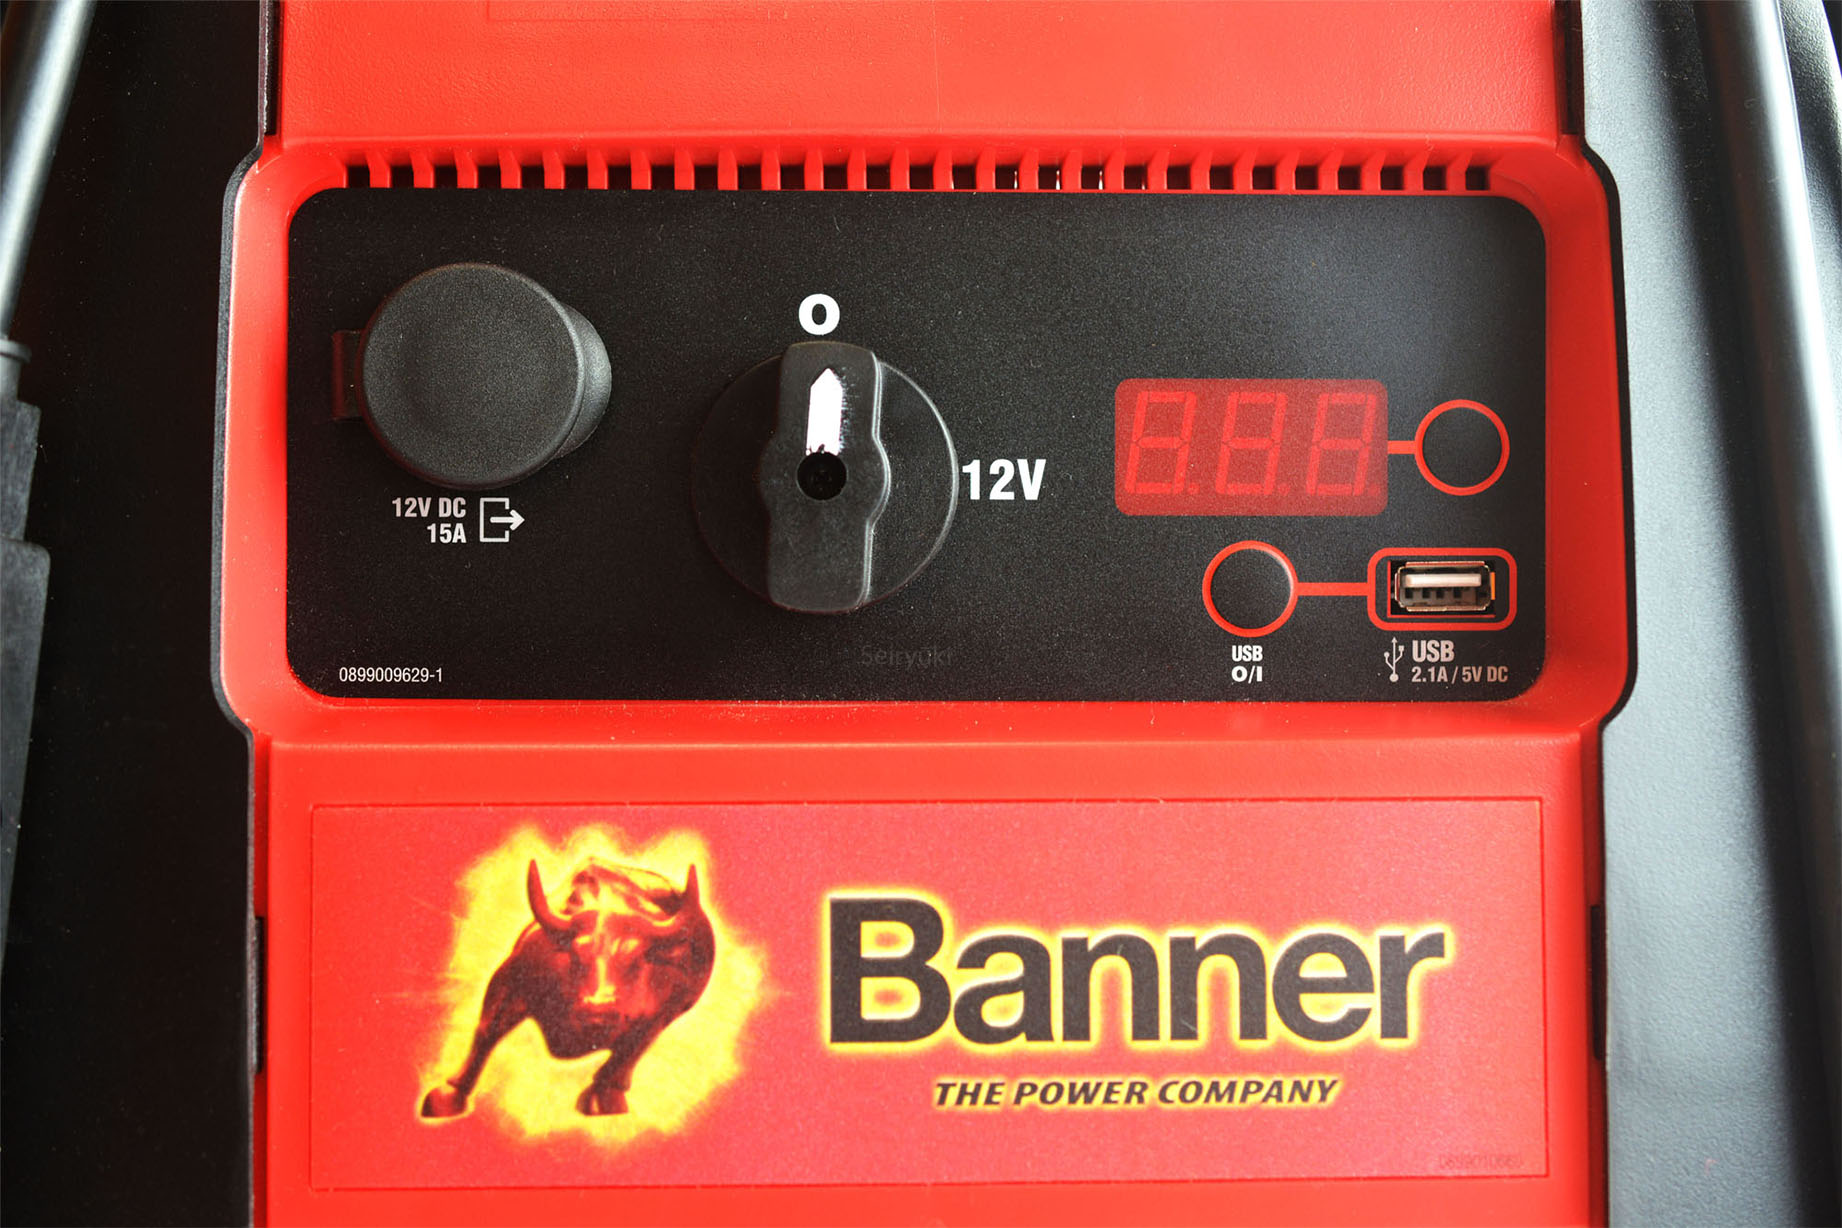 Banner Power Booster PB12/24 (PS12/24) 12V & 24 V 4600/2300A PKW